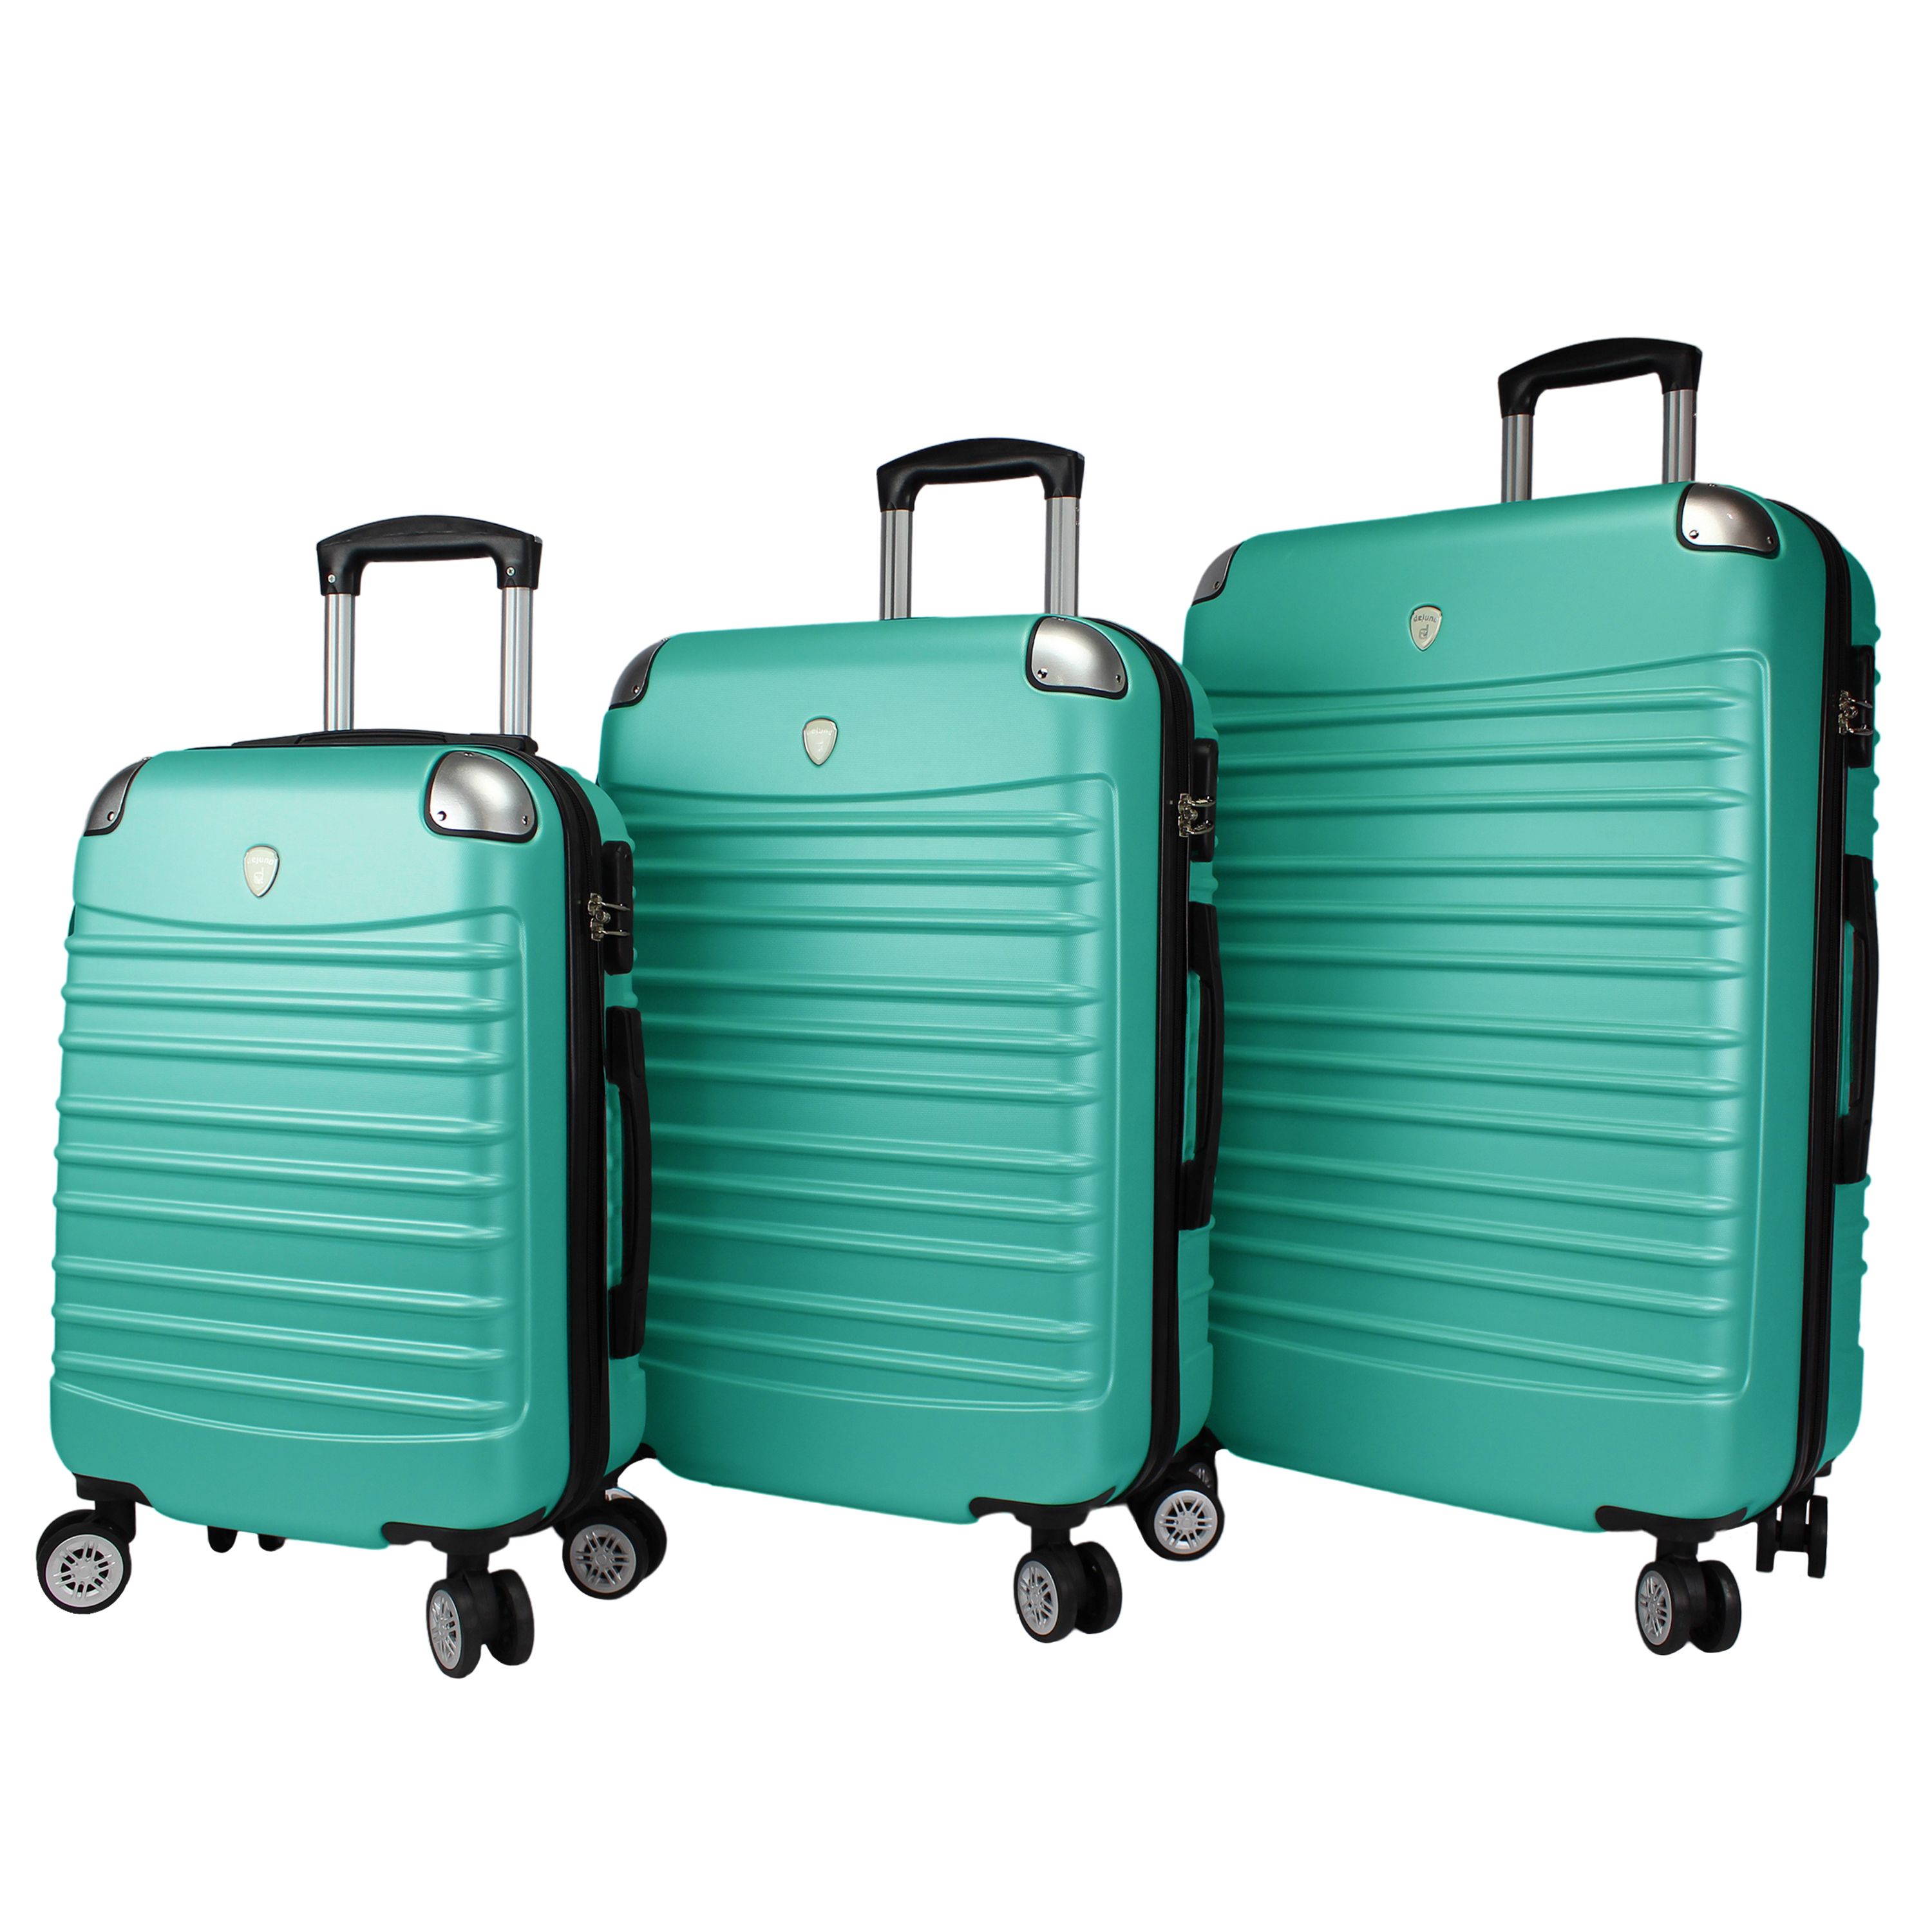 25dj-610-green Impact Hardside Spinner Luggage Set - Green, 3 Piece